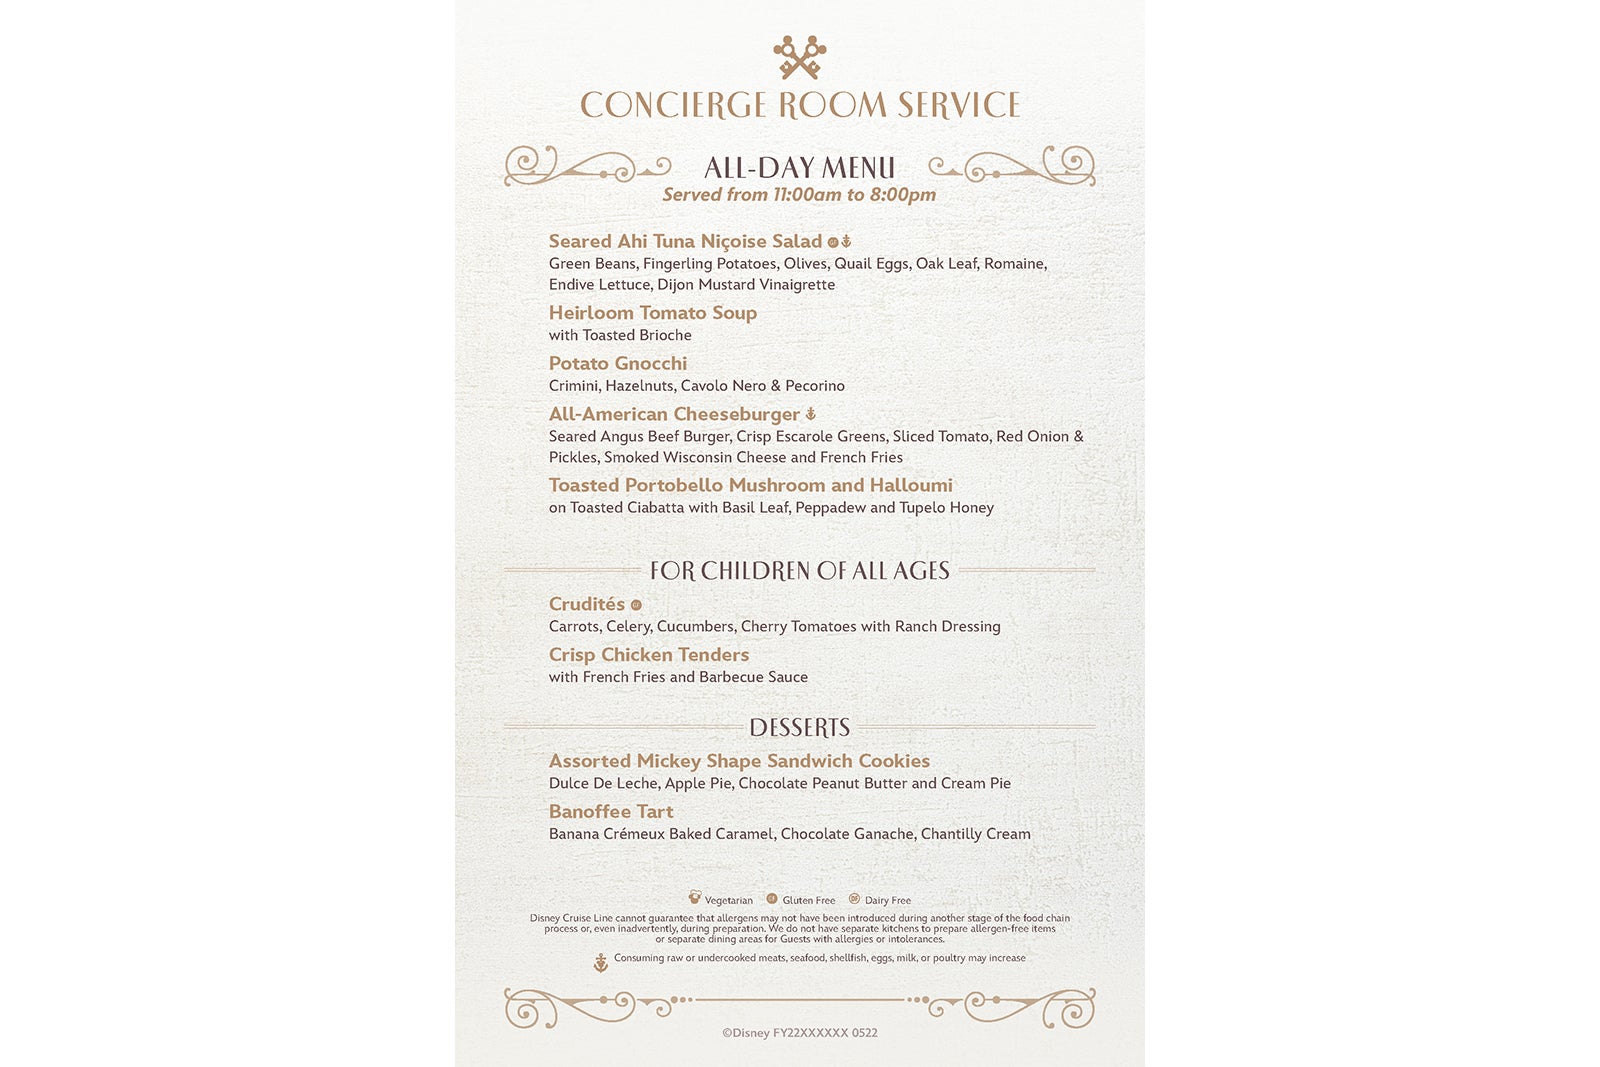 celebrity cruise concierge room service menu